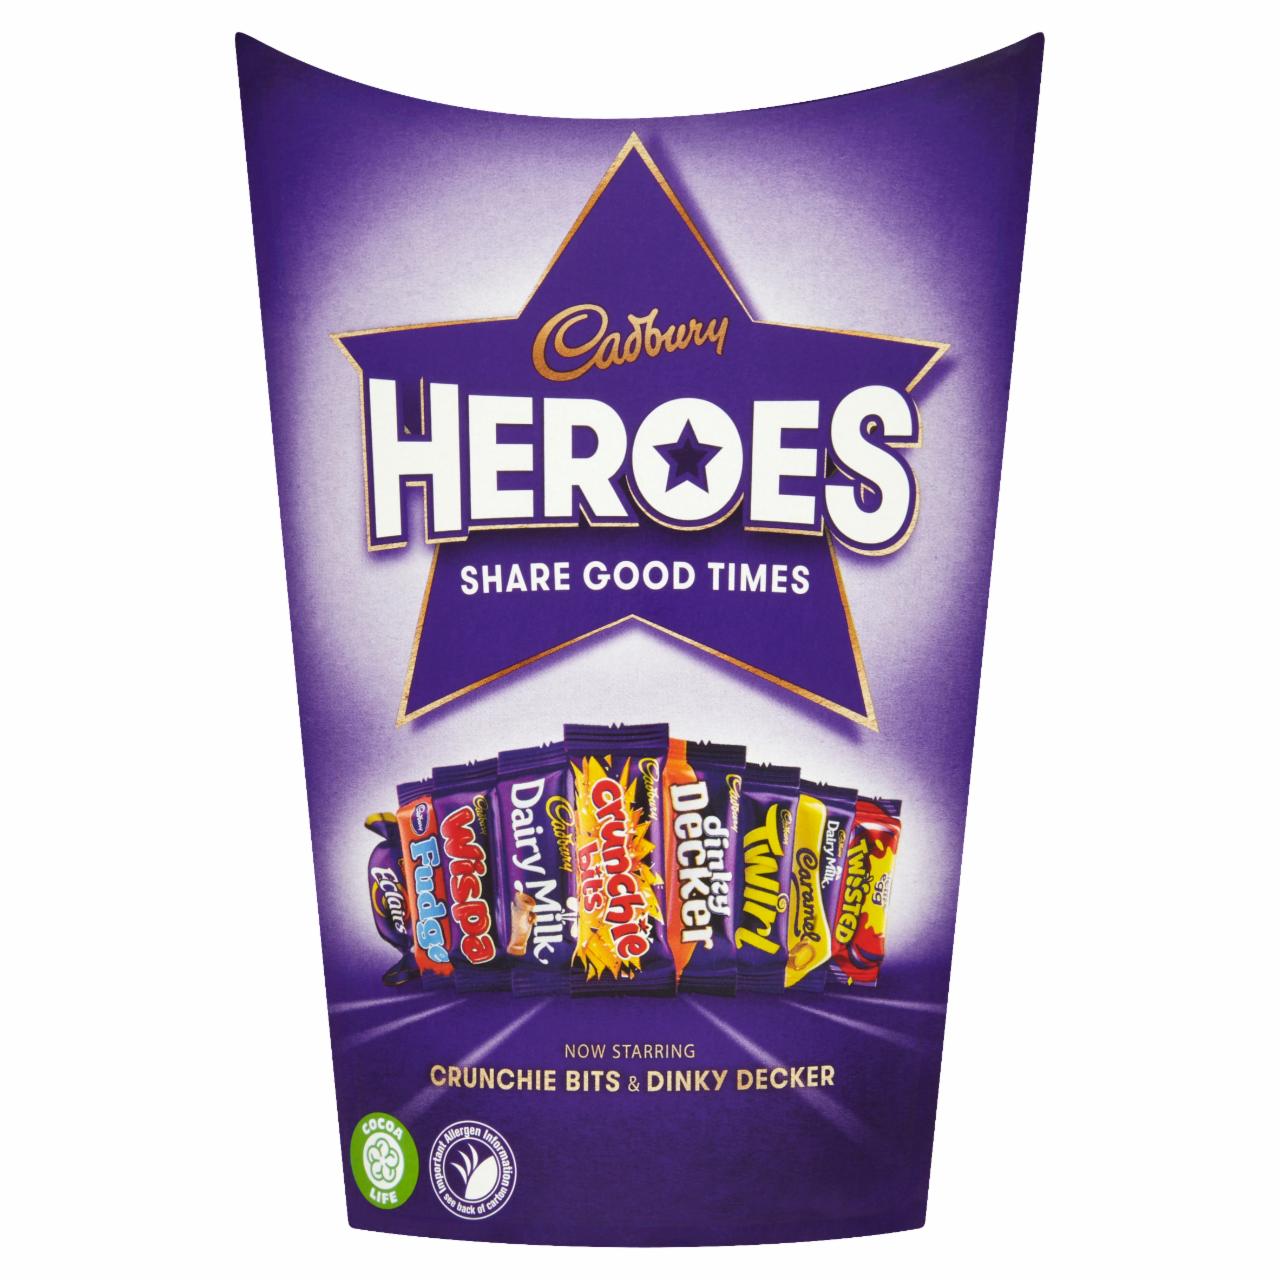 Fotografie - Heroes Share Good Times - Crunchy Bits & Dinky Decker, Cadbury